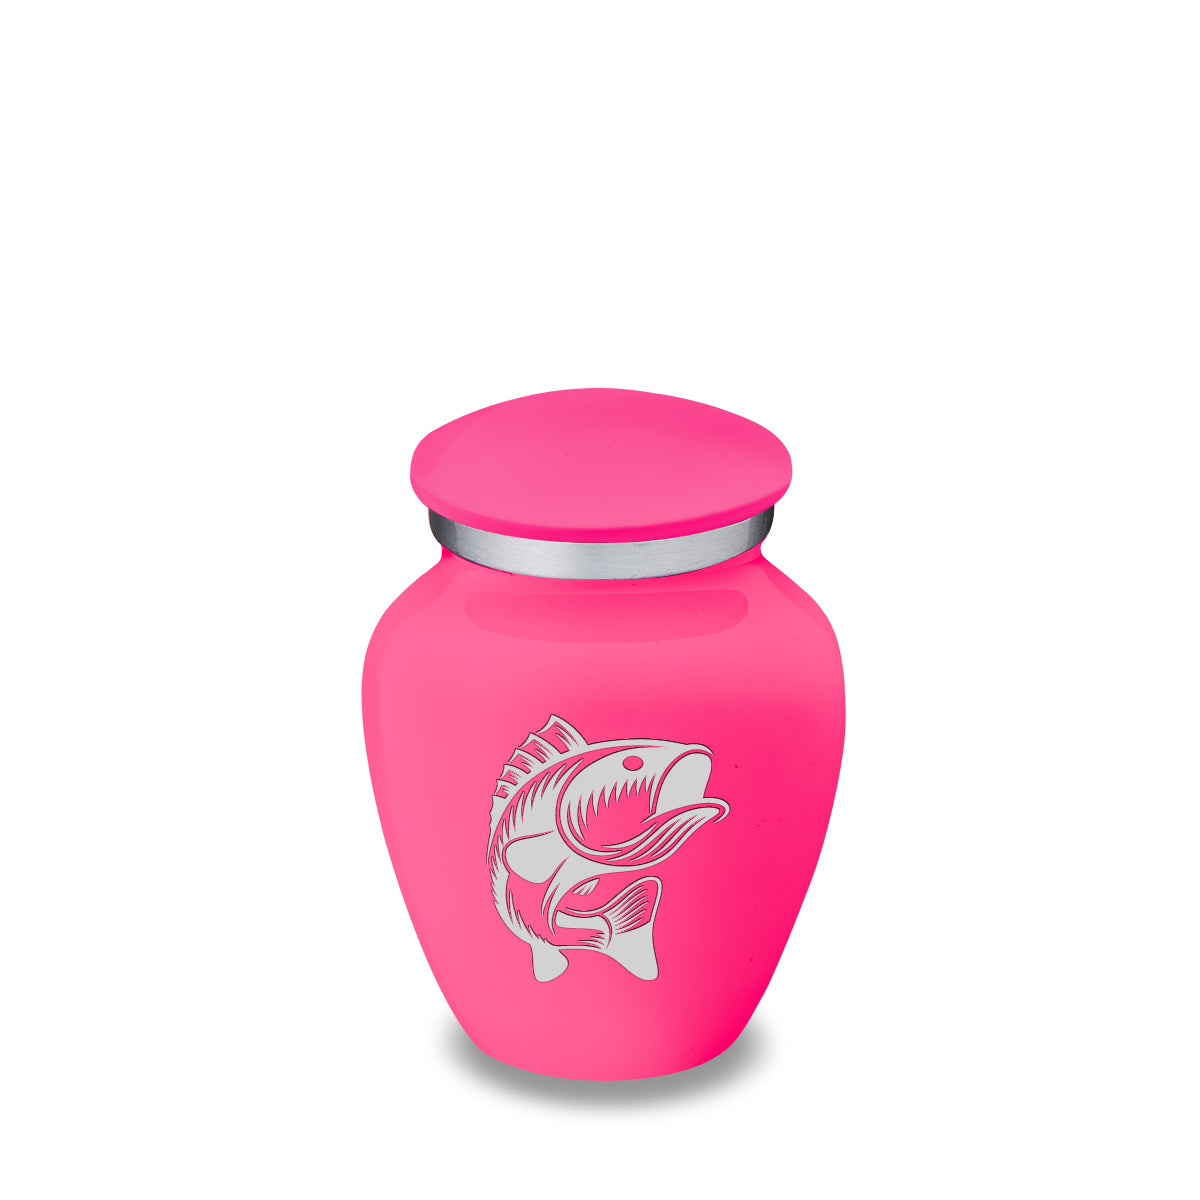 Keepsake Embrace Bright Pink Fish Cremation Urn